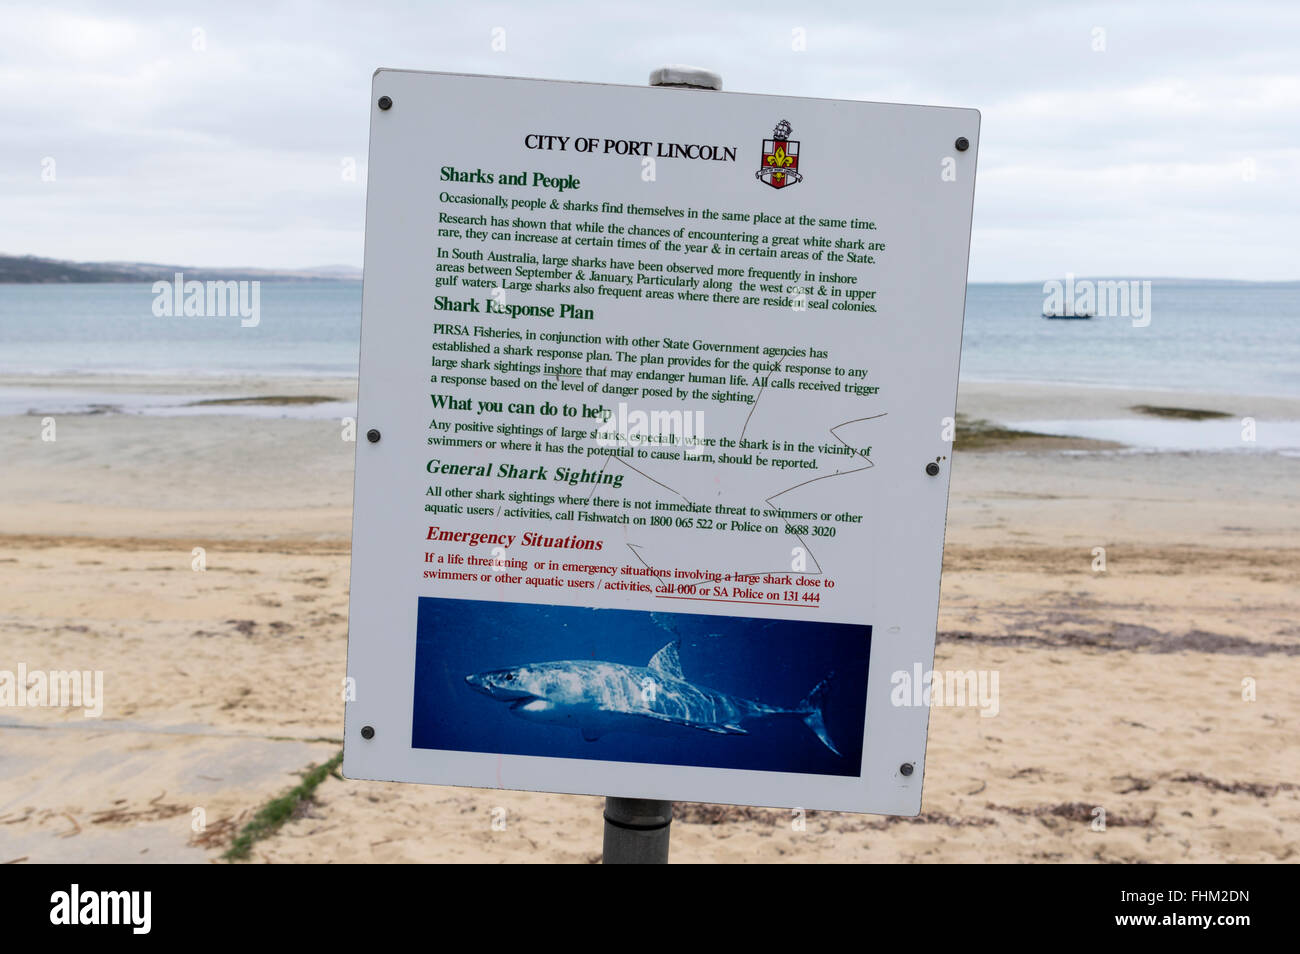 Hai-Warnschild am Strand in Port Lincoln, South Australia. Stockfoto